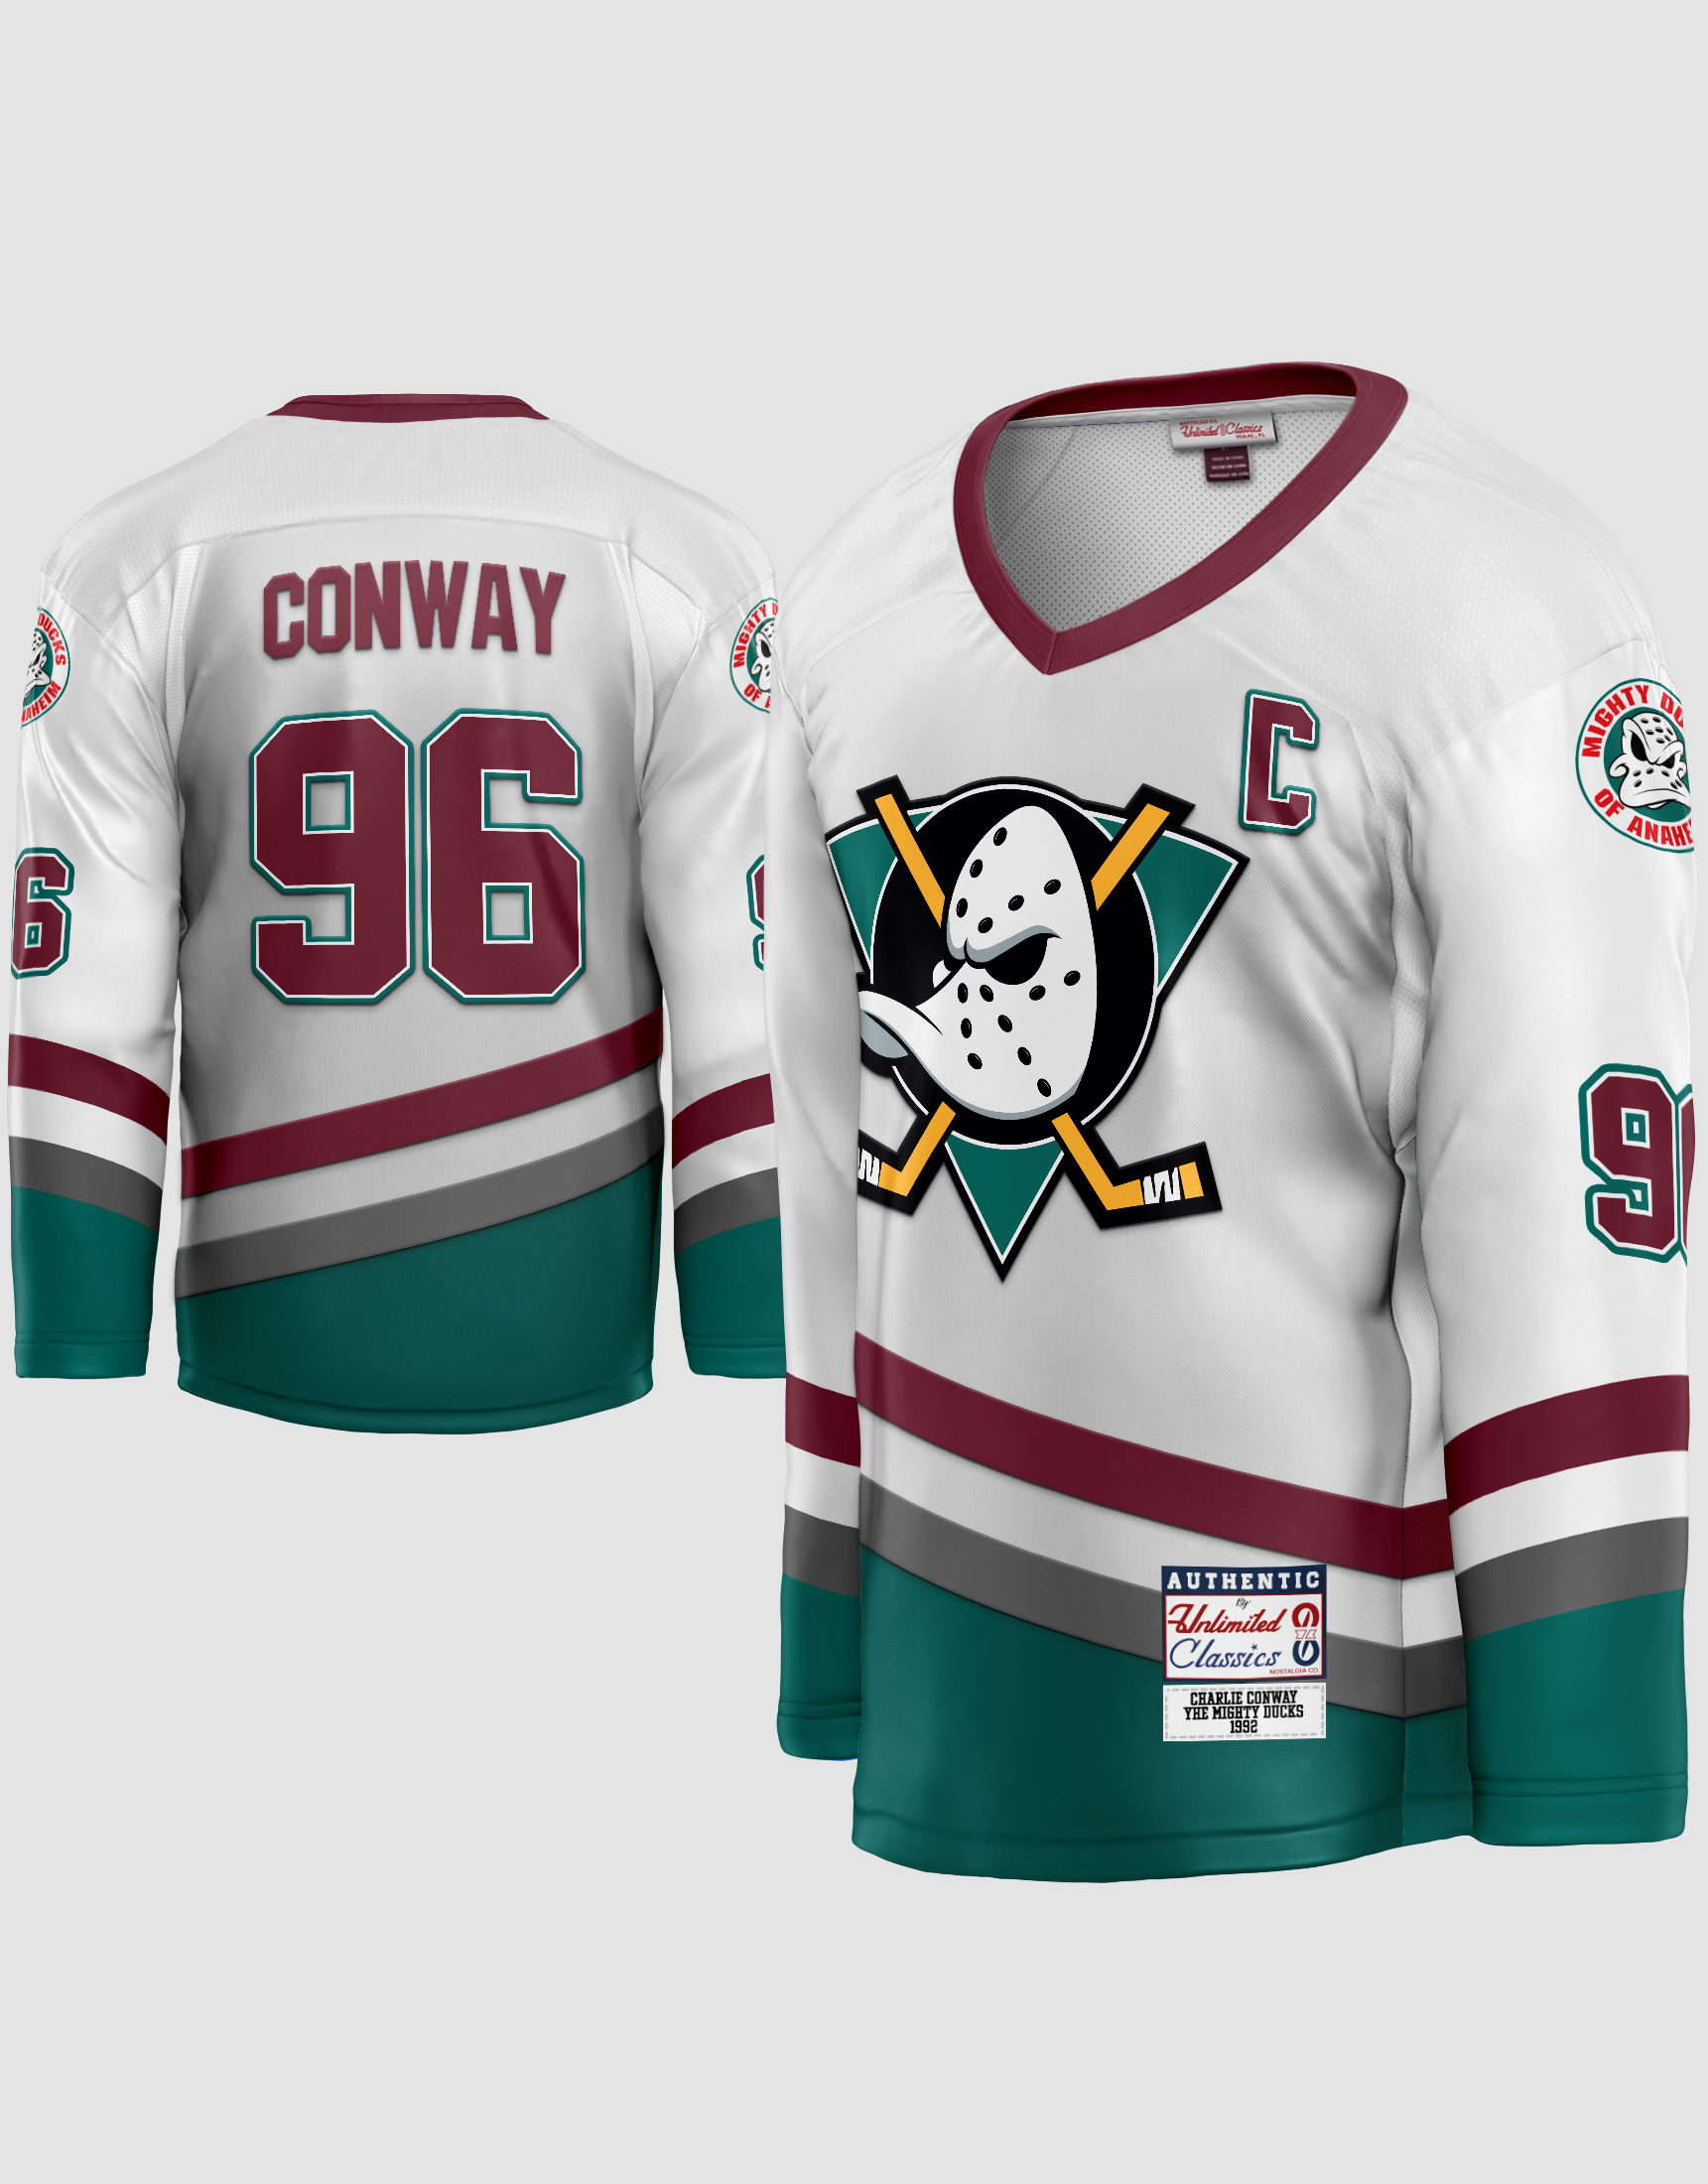  Charlie Conway #96 Mighty Ducks Ice Hockey Jersey S-XXXL :  Clothing, Shoes & Jewelry